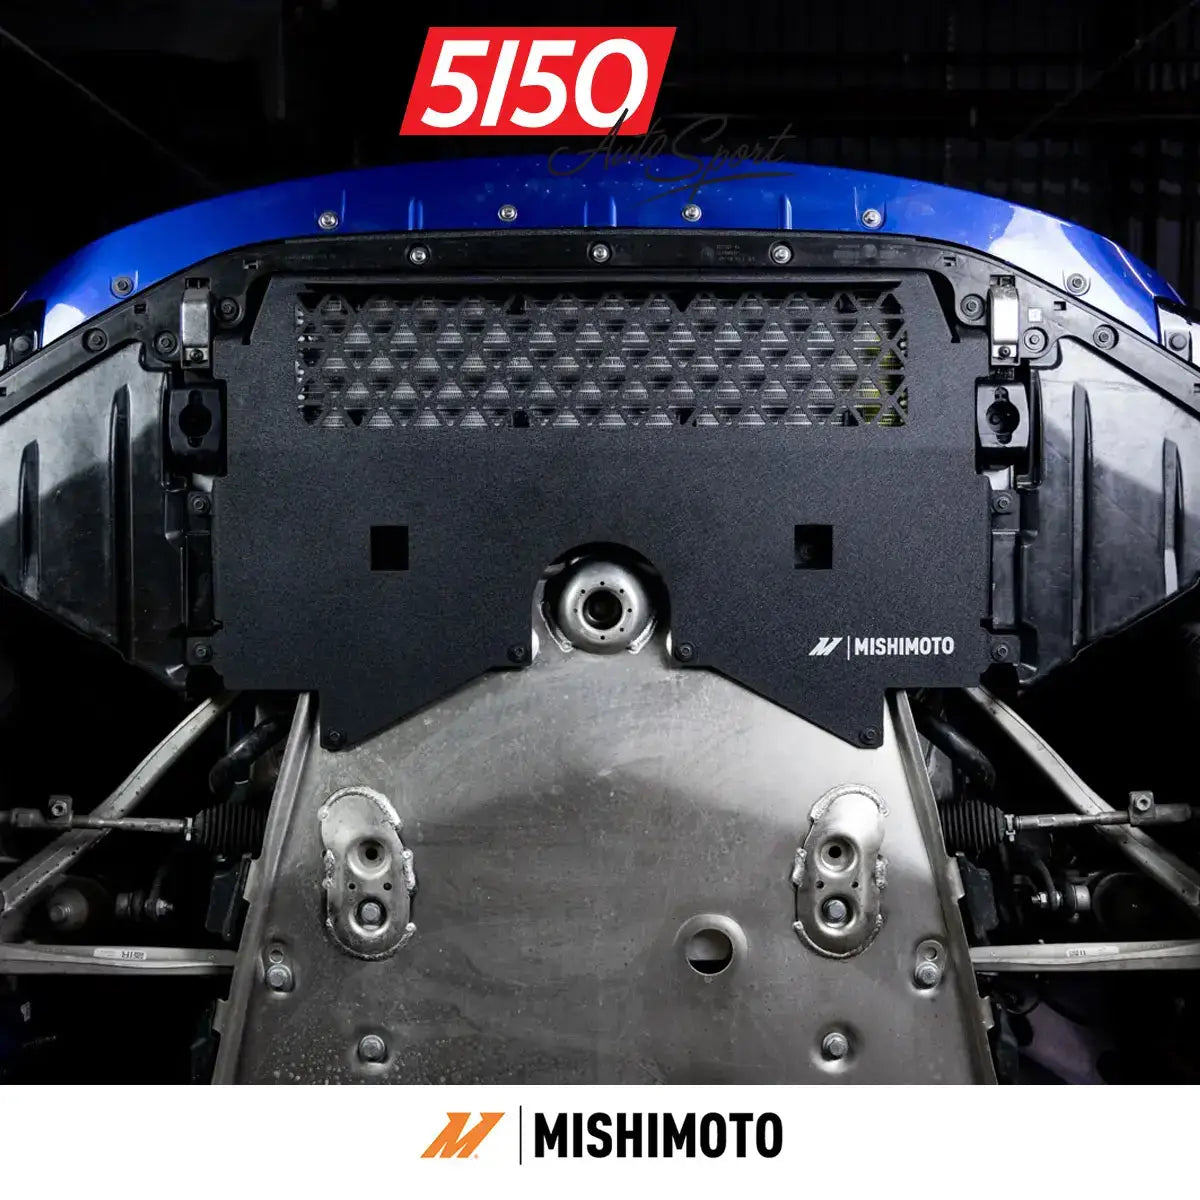 Mishimoto Skid Plate Reinforcement for G80 G82 G83 G87